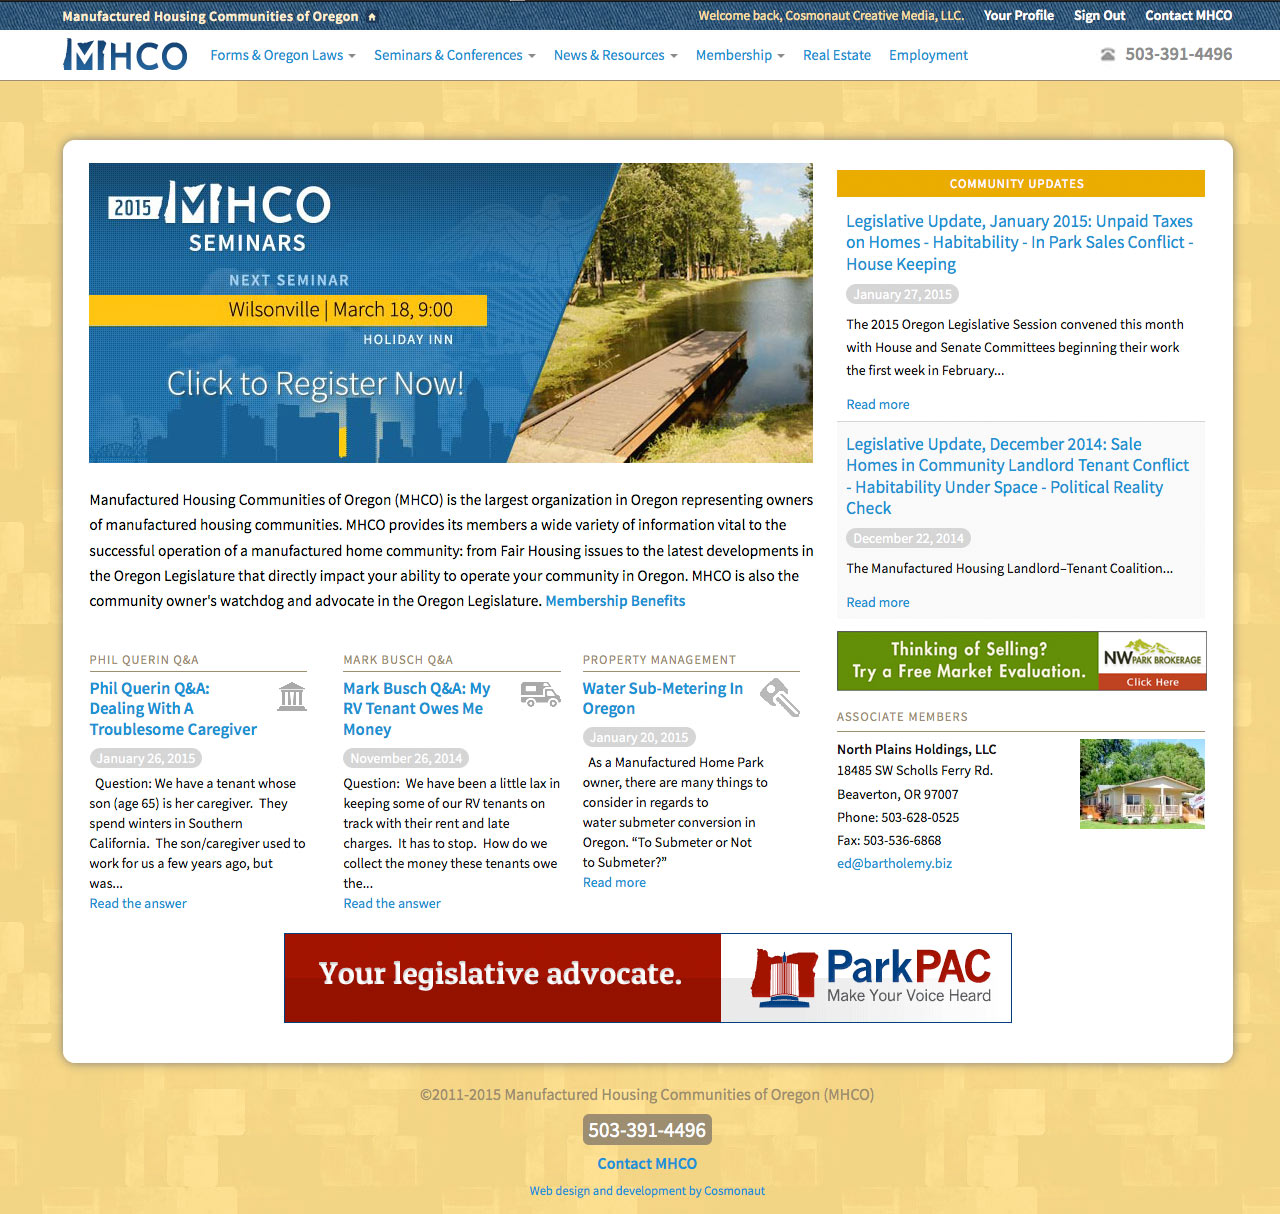 Manufactured Housing Communities of Oregon (MHCO) Web Design and Development